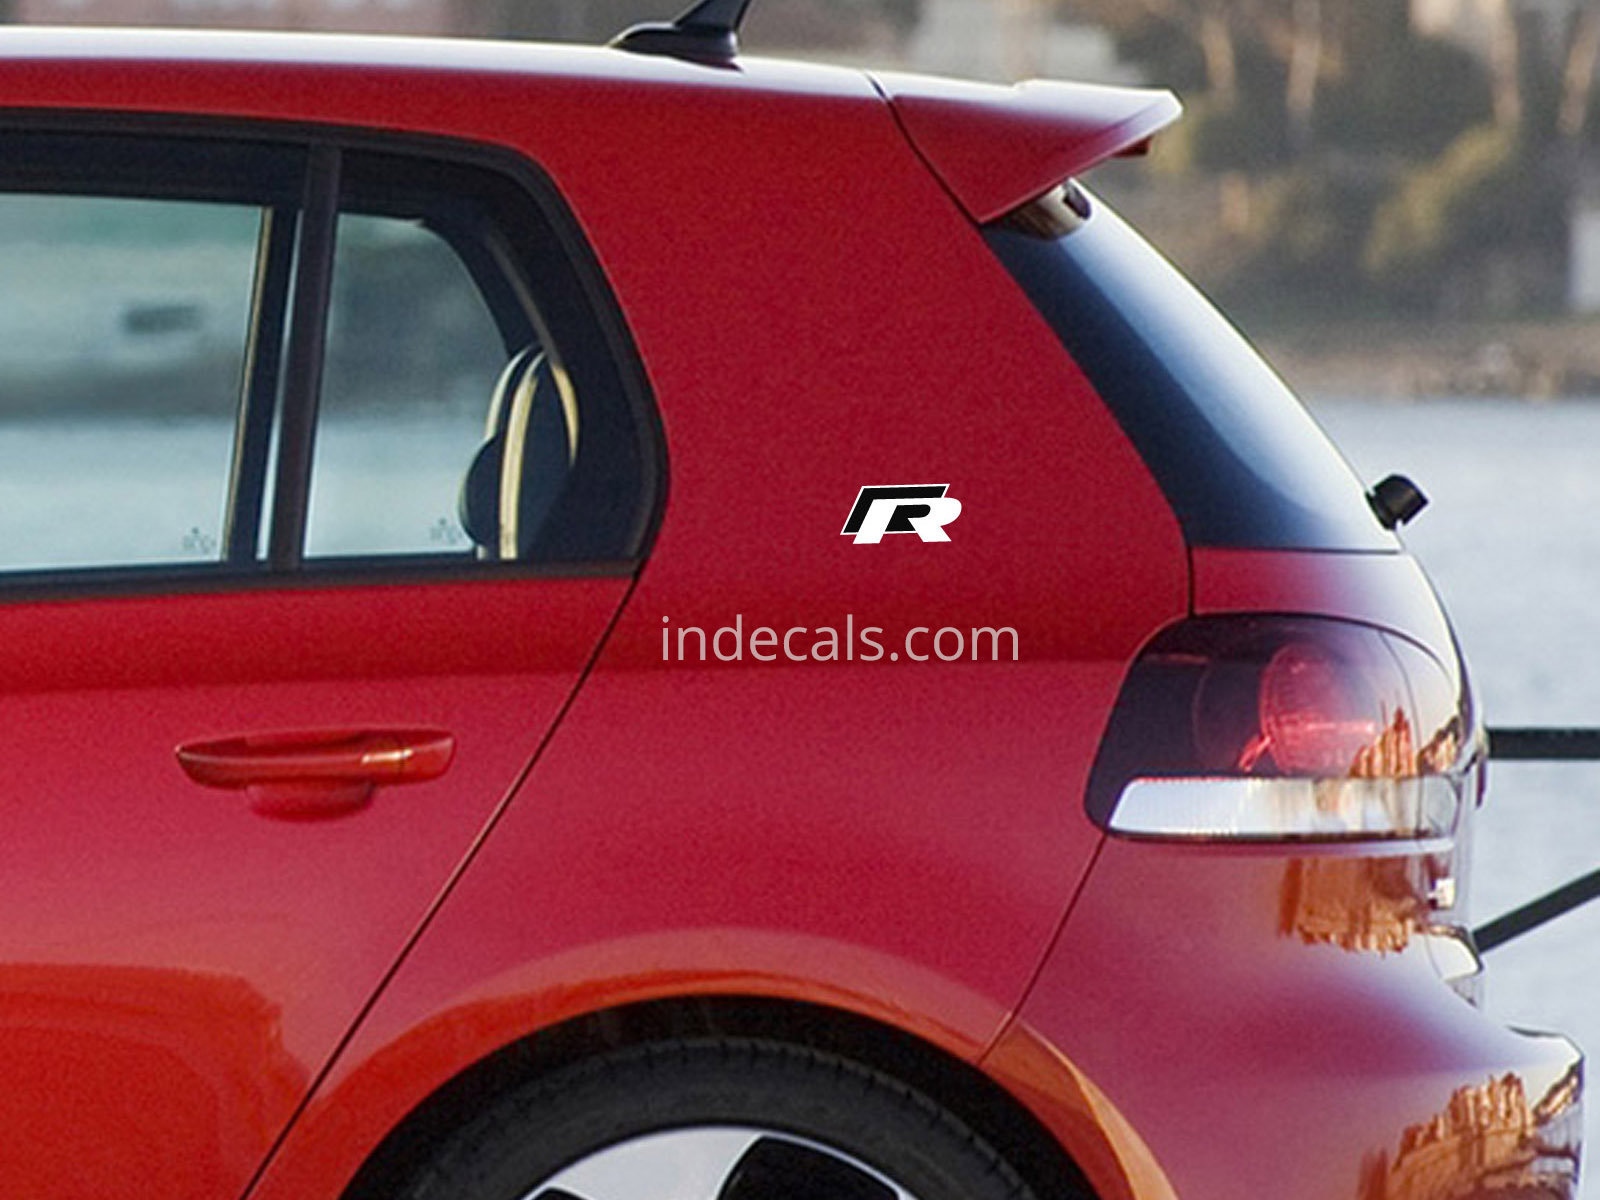 2 x Volkswagen R-Line stickers for Rear Quarter